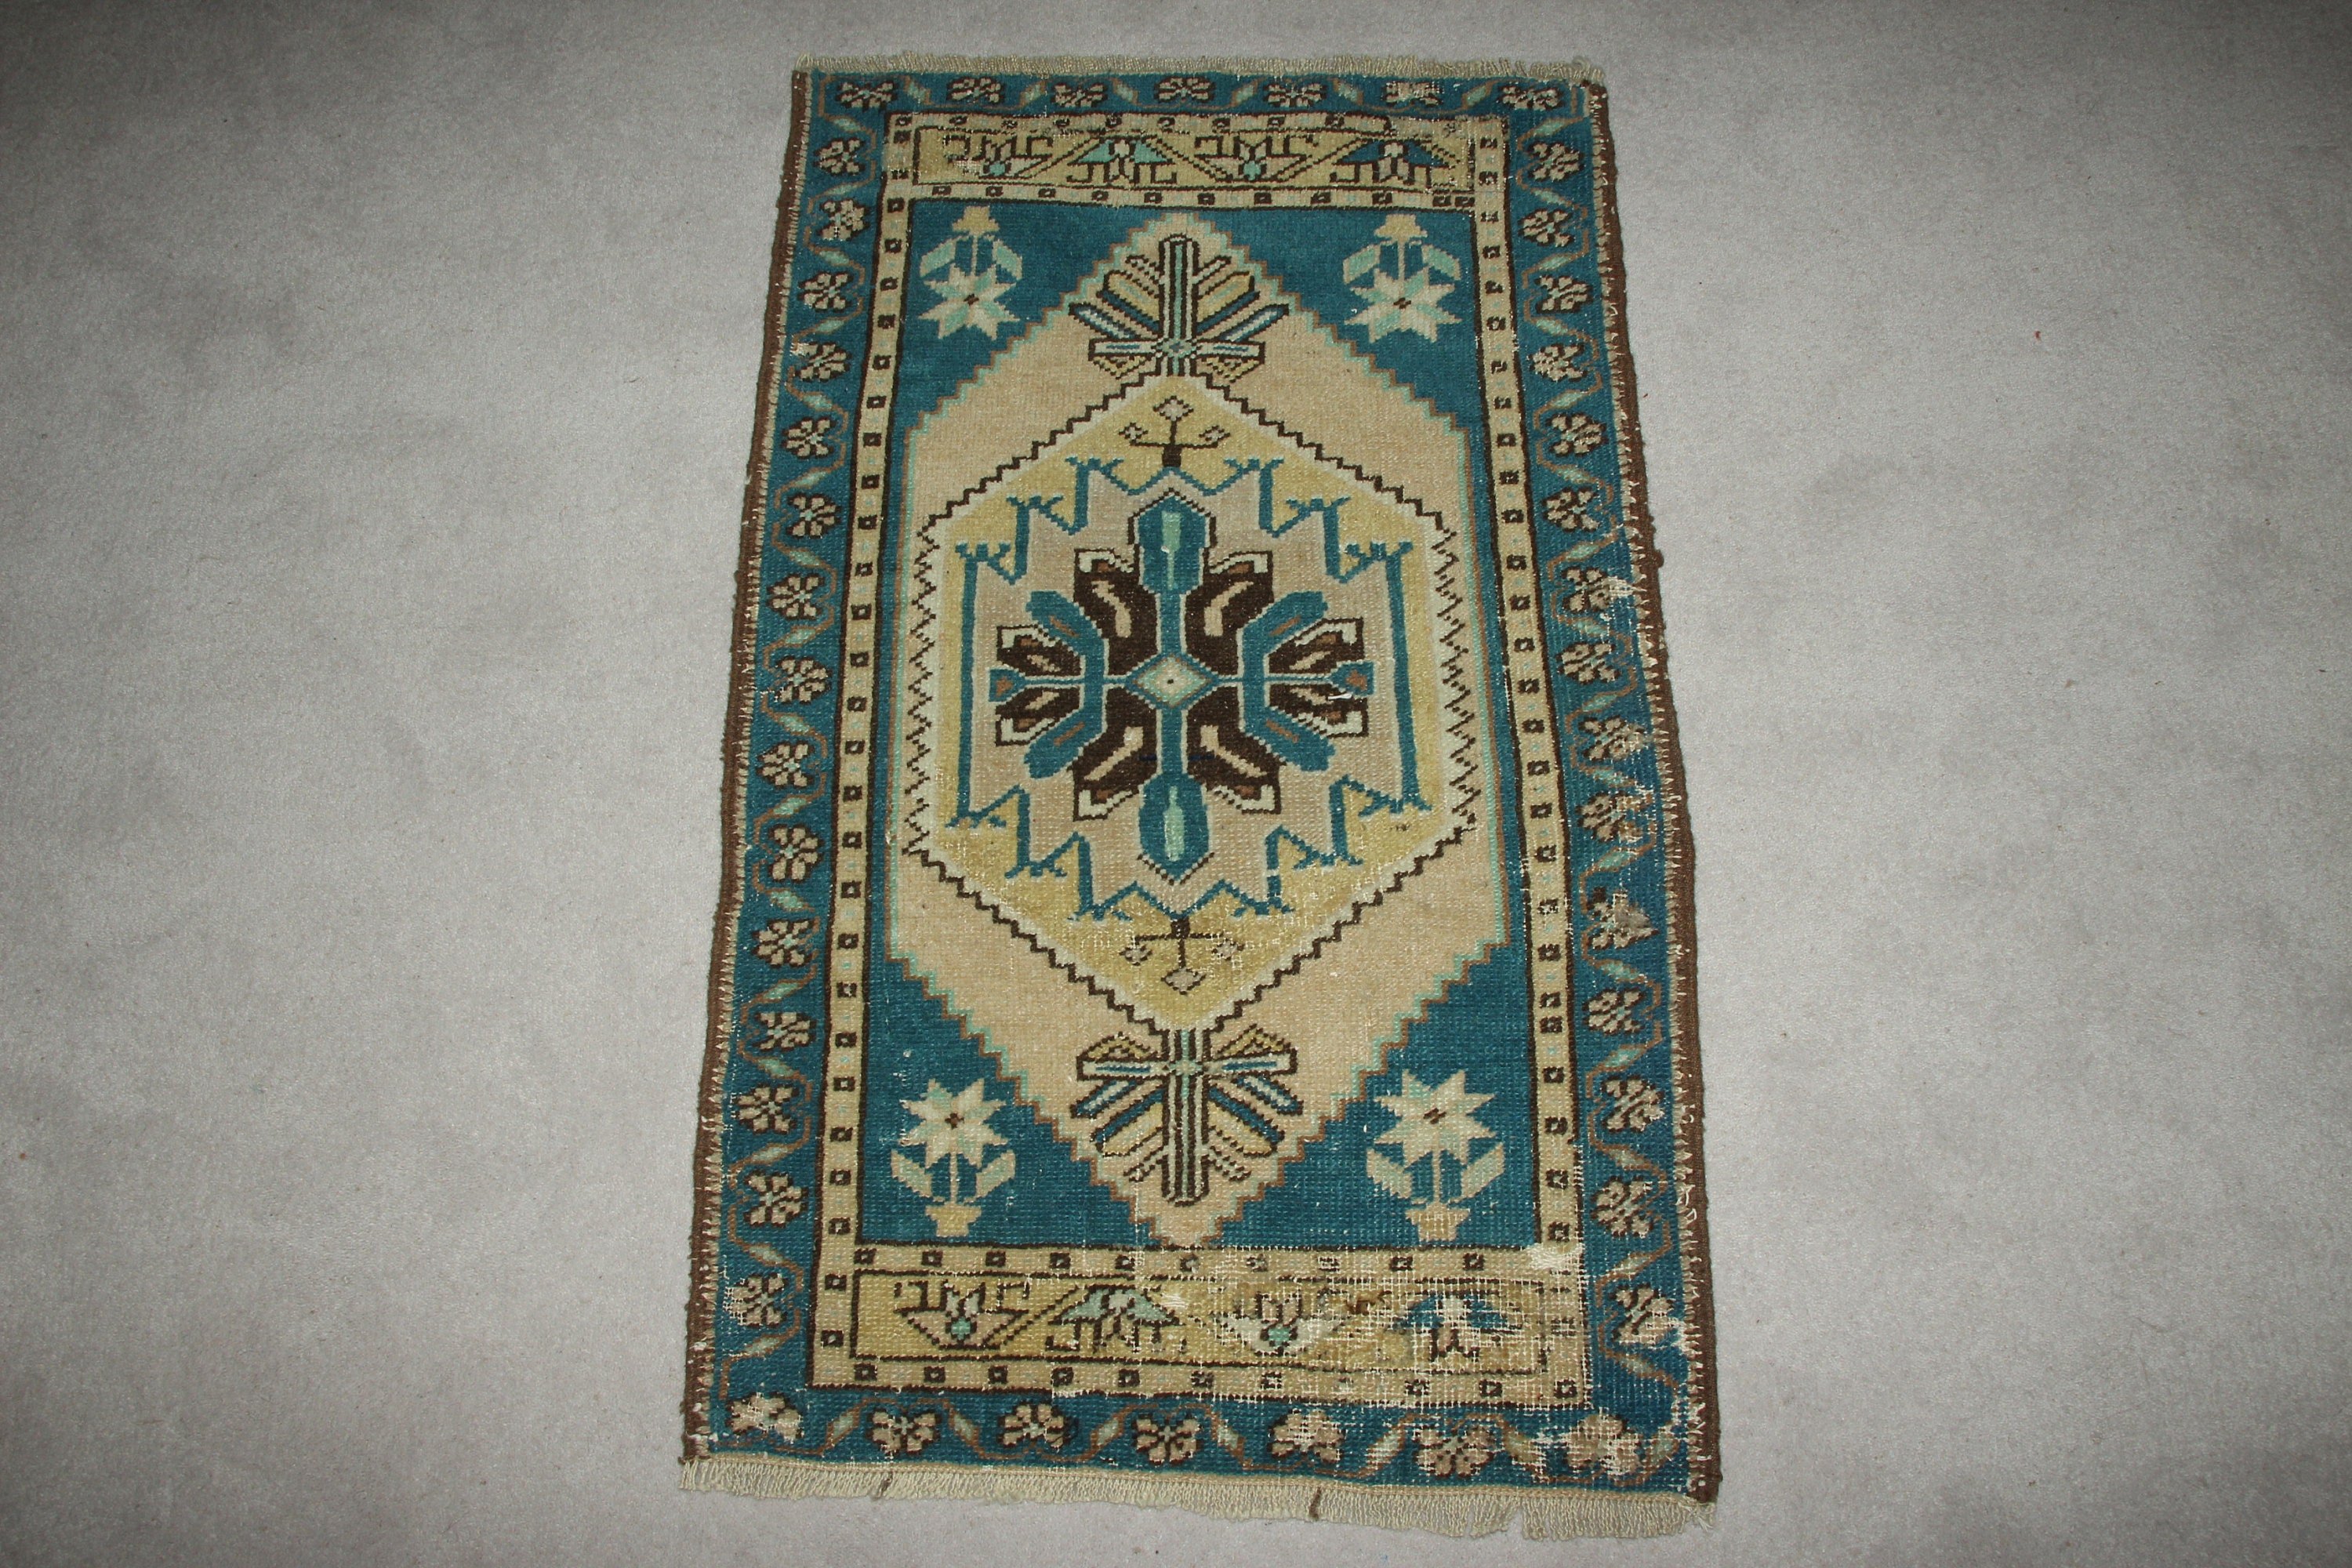 Wool Rug, Bathroom Rug, Blue Anatolian Rug, 1.9x3.1 ft Small Rug, Rugs for Bathroom, Bedroom Rugs, Turkish Rugs, Vintage Rug